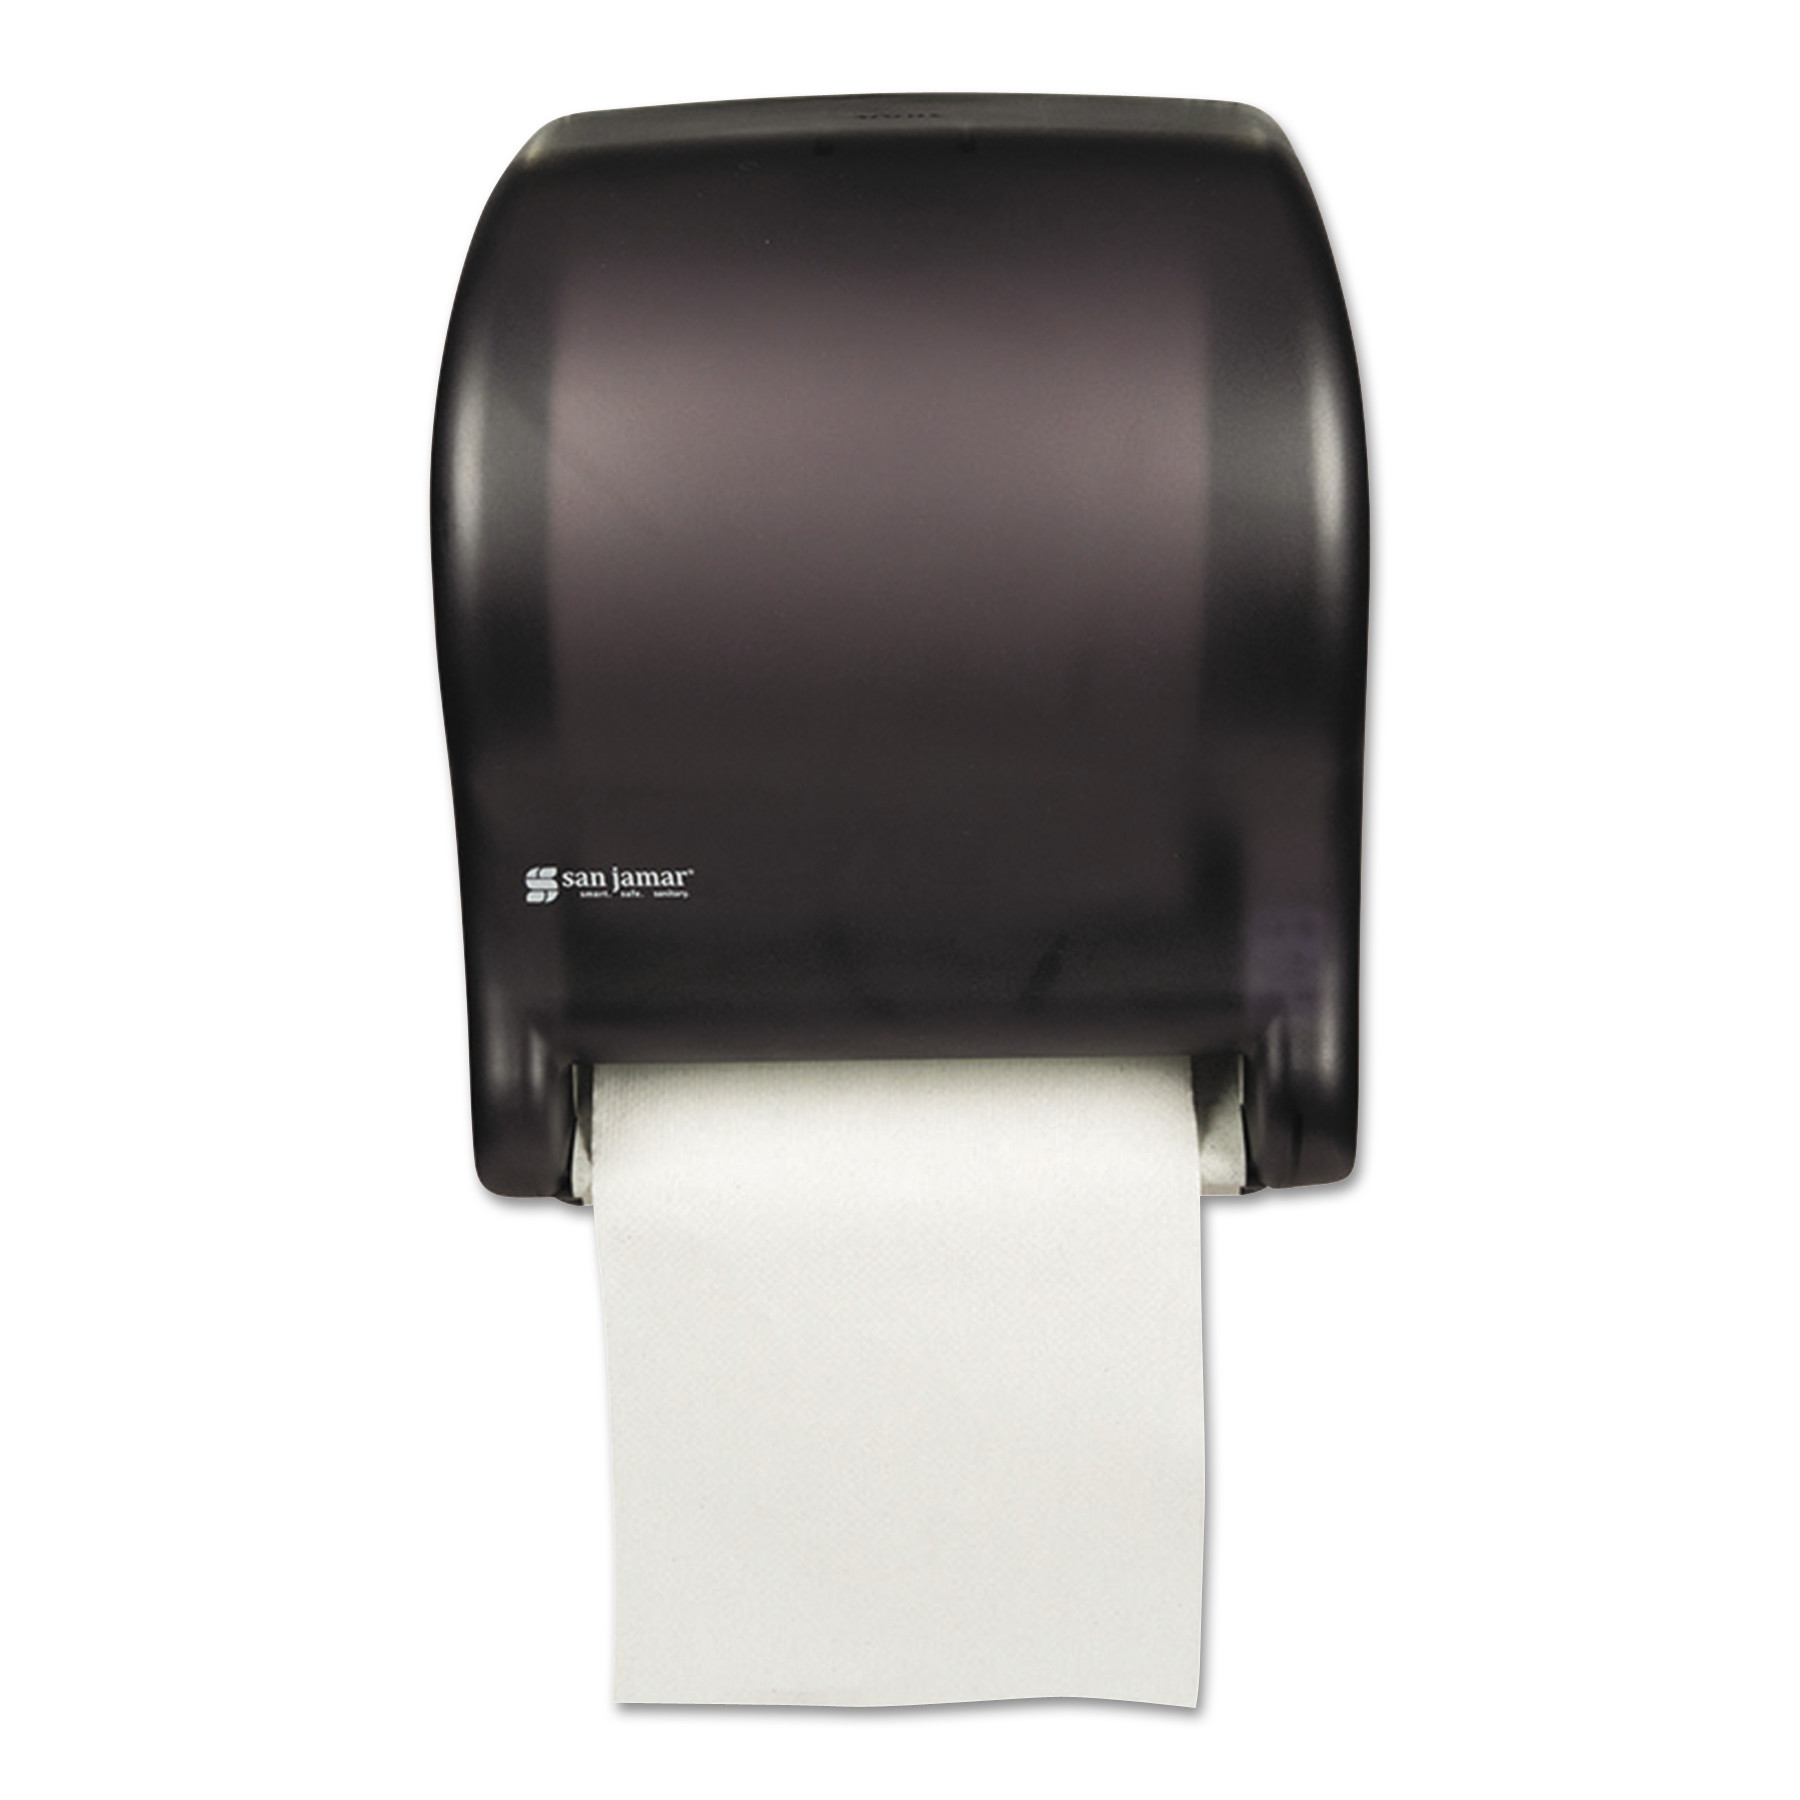 IN-SIGHT Universal Towel Dispenser 13 31/100w x 5 16/20d x 18 16/20h,Smoke/Gray